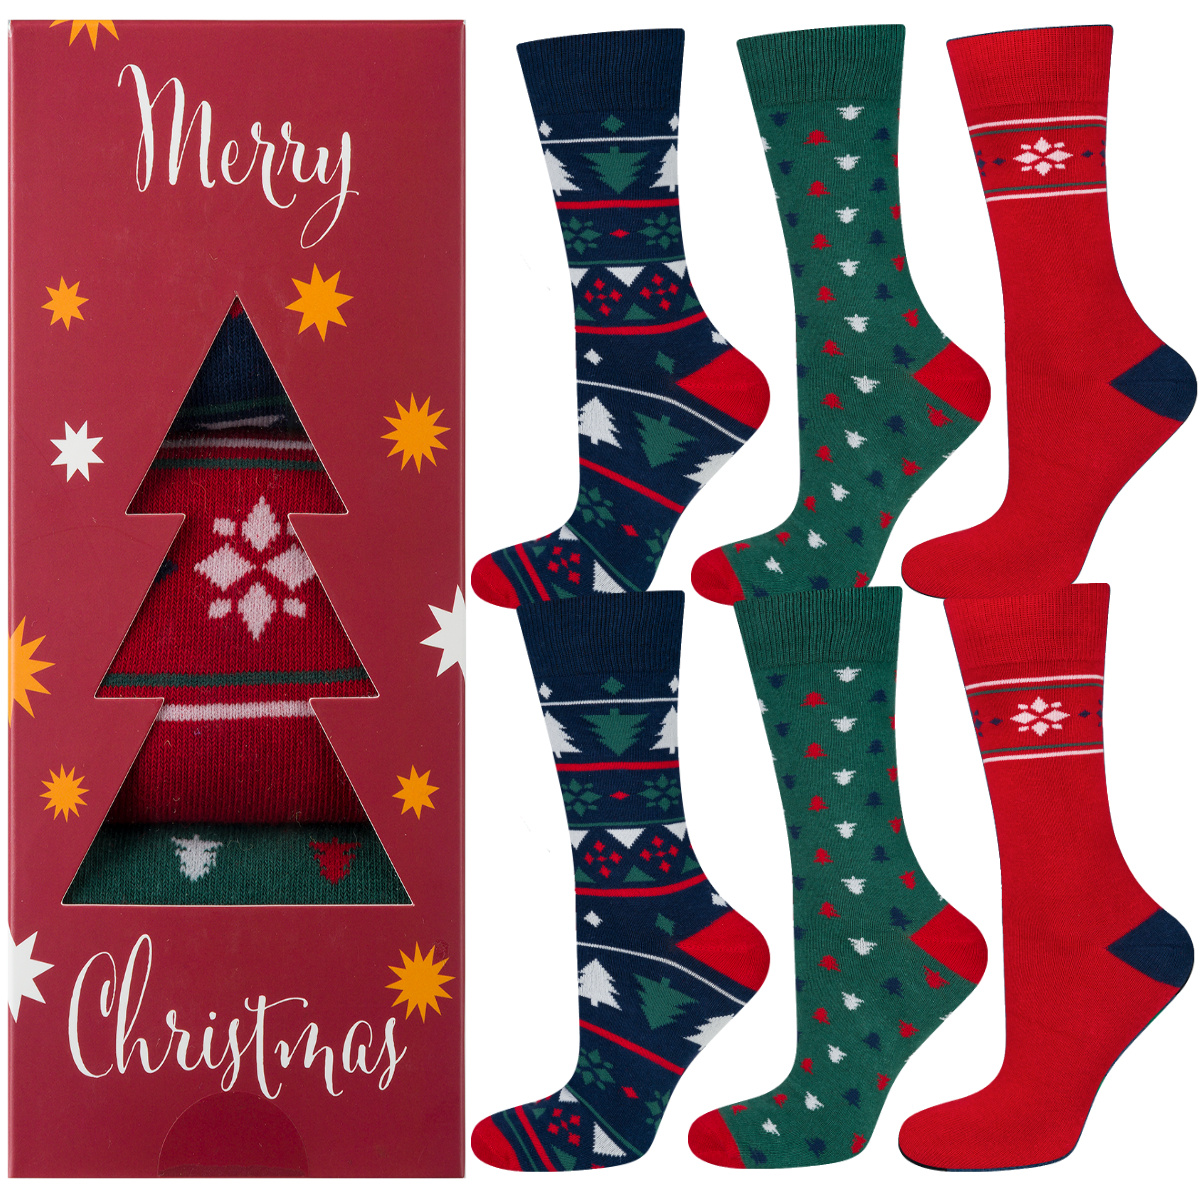 Christmas socks in a package for men